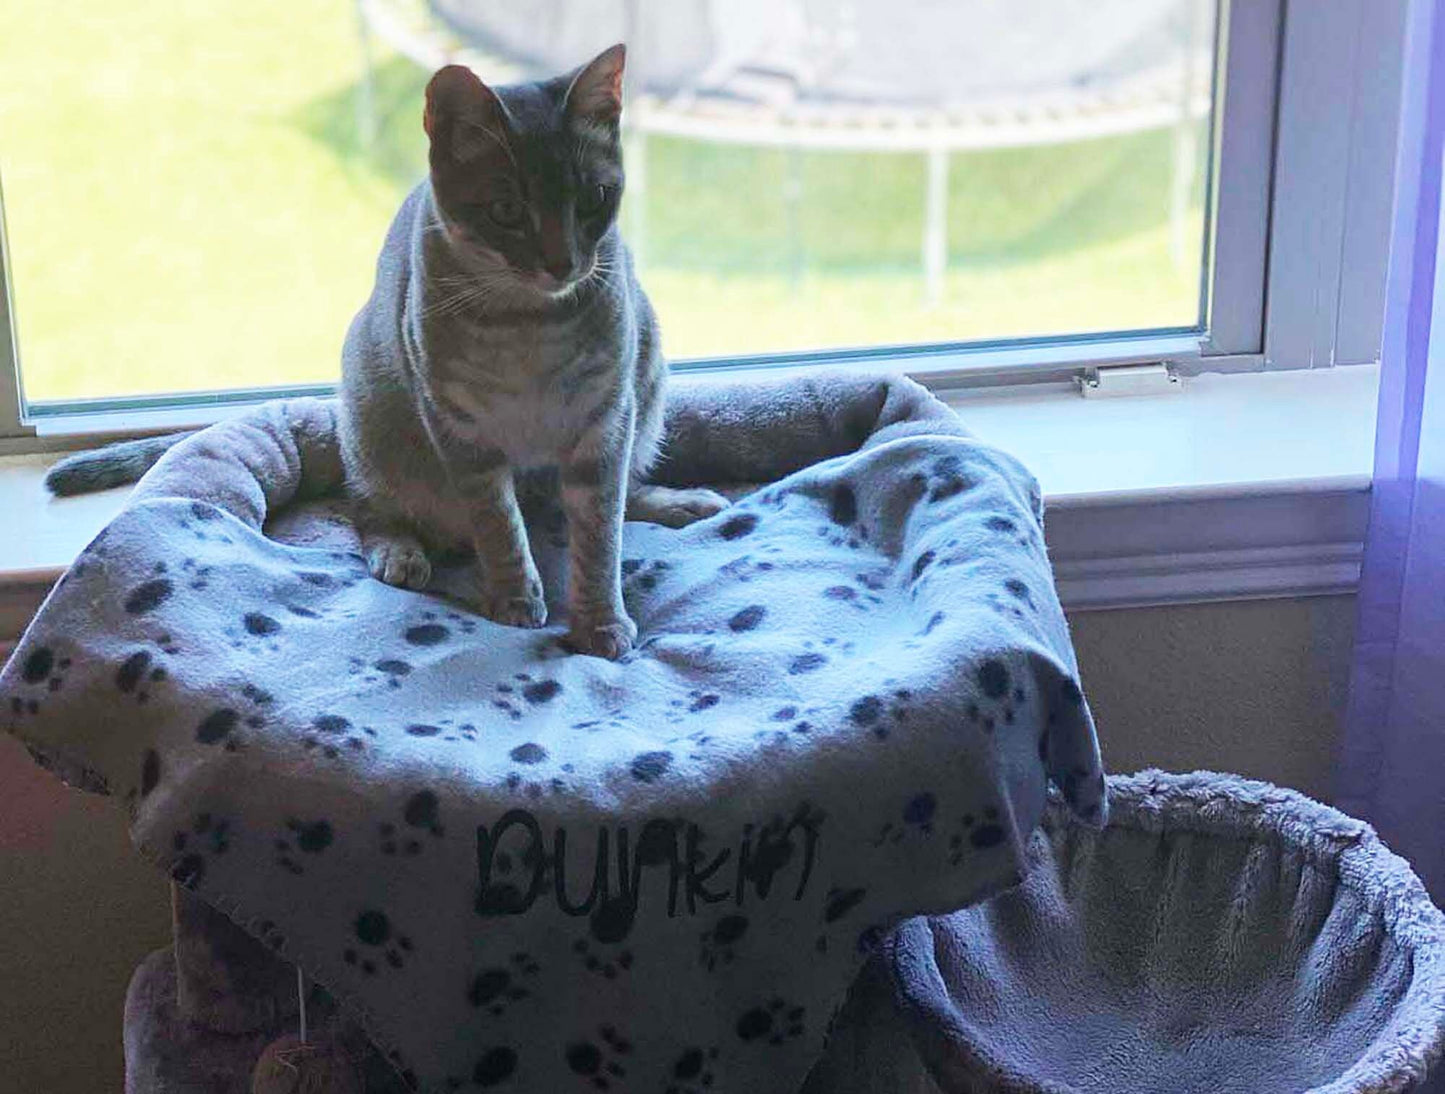 Custom Cat Blanket, Monogrammed Dog Blanket, Puppy Name Blanket, Cat Blanket, Embroidered Fleece Blanket, Pet Bedding, Cat Bed with Name